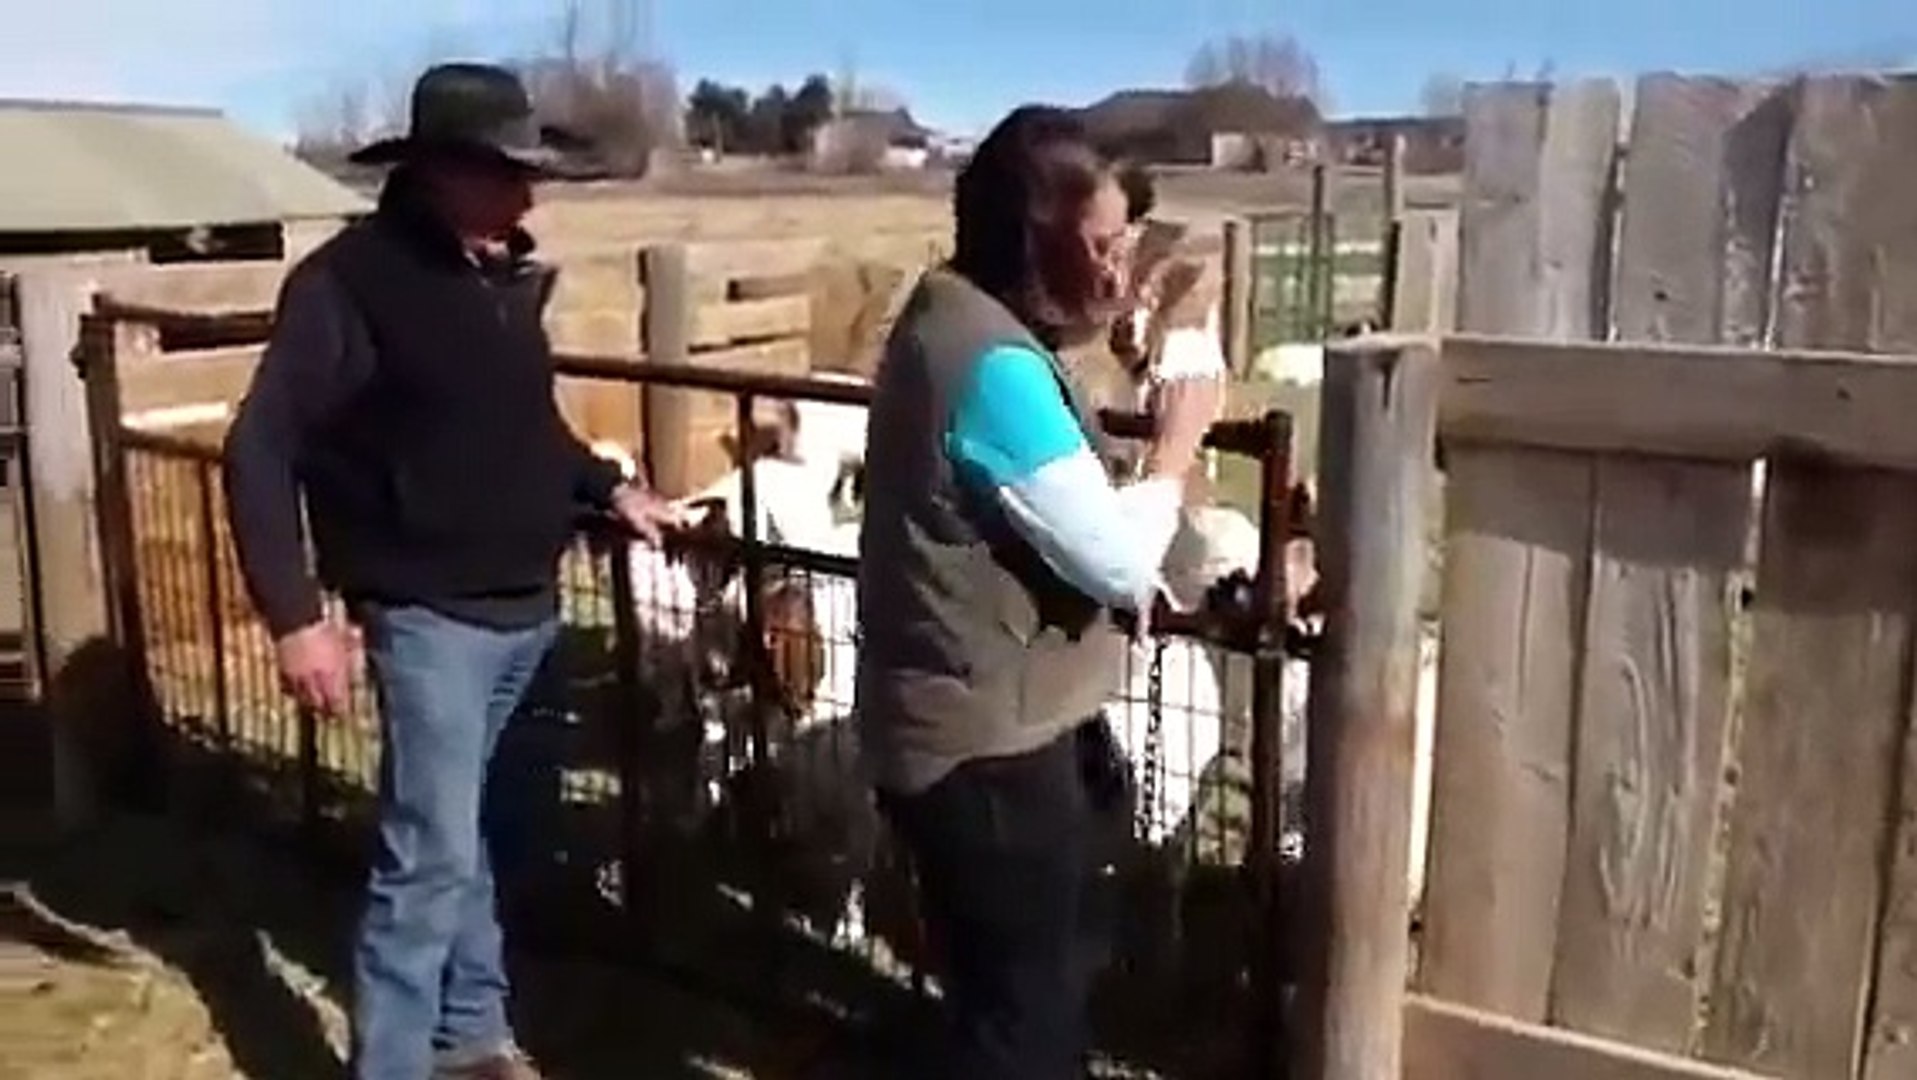 Raising Boer Goats